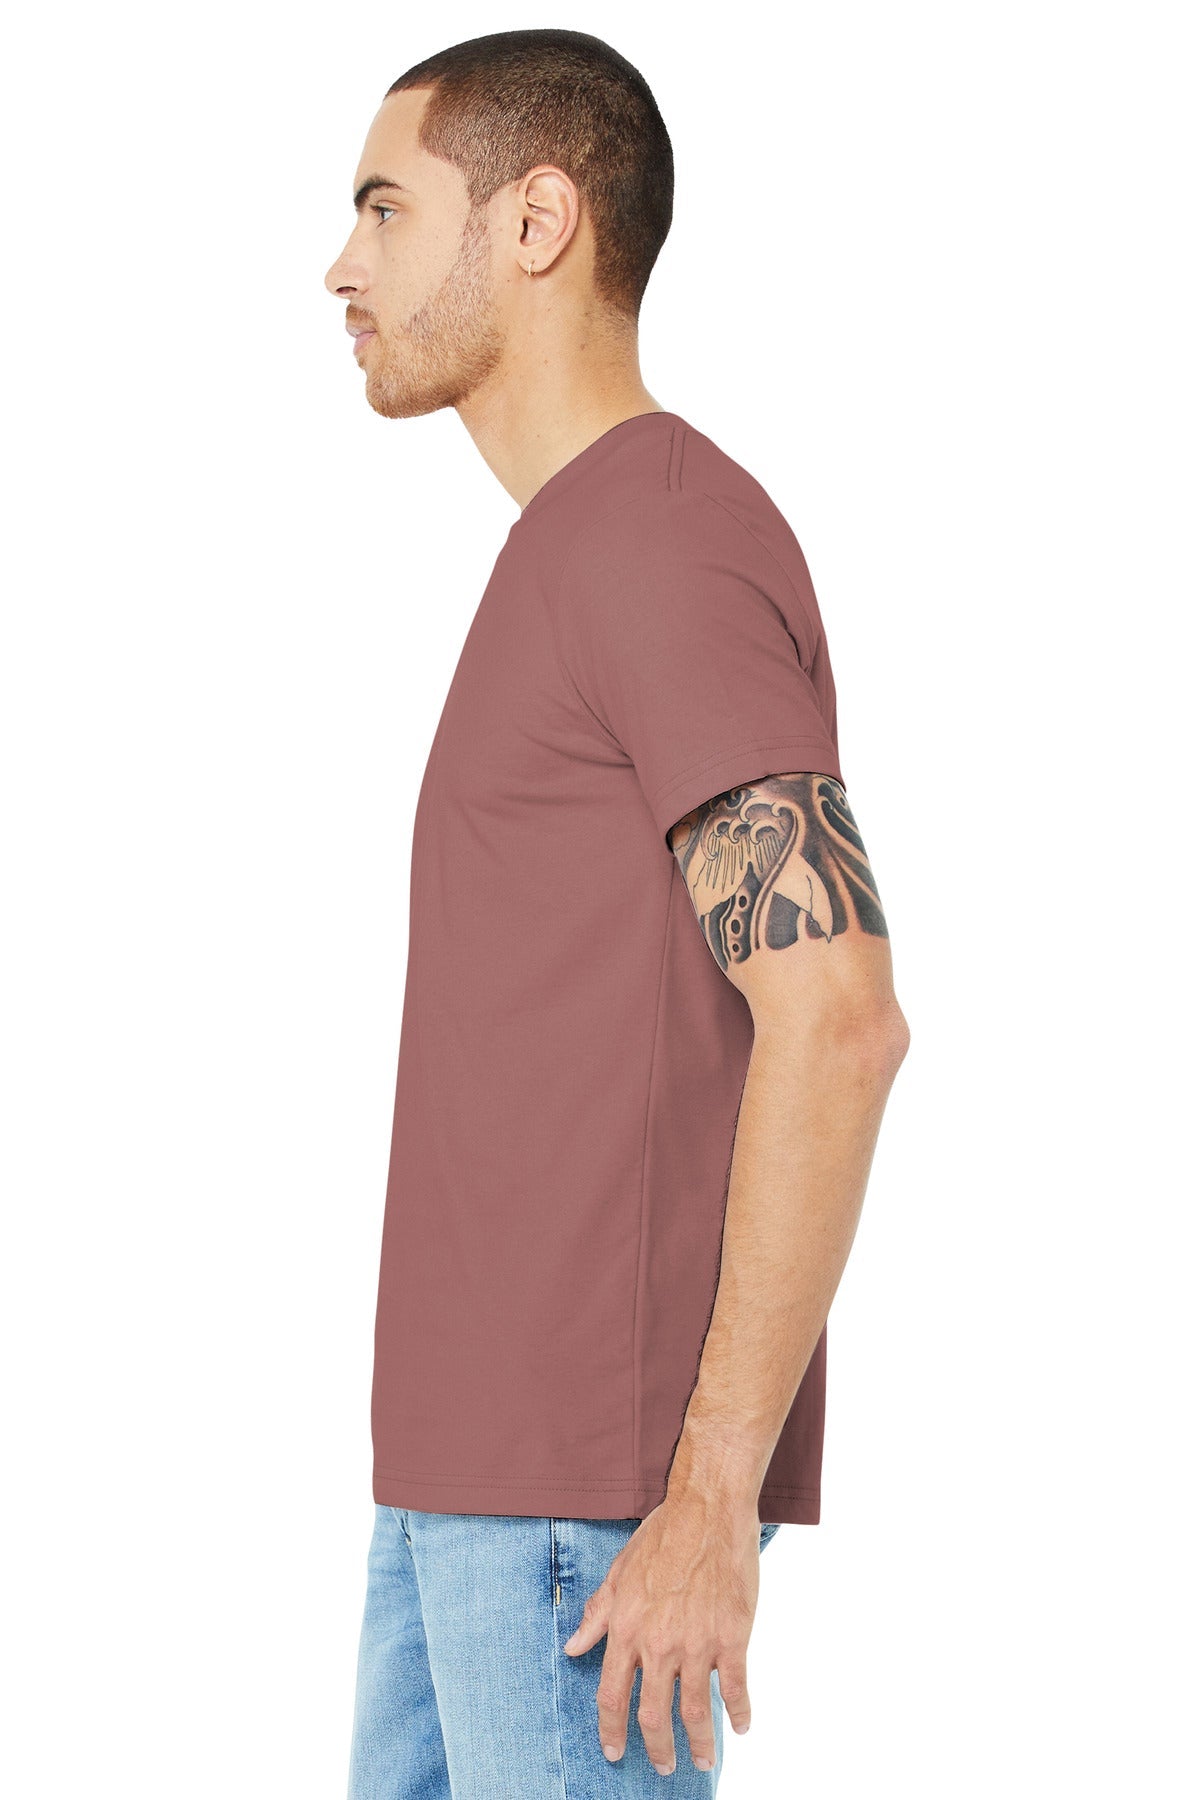 Bella + Canvas - Unisex Jersey Short-Sleeve T-Shirt-MAROON-M